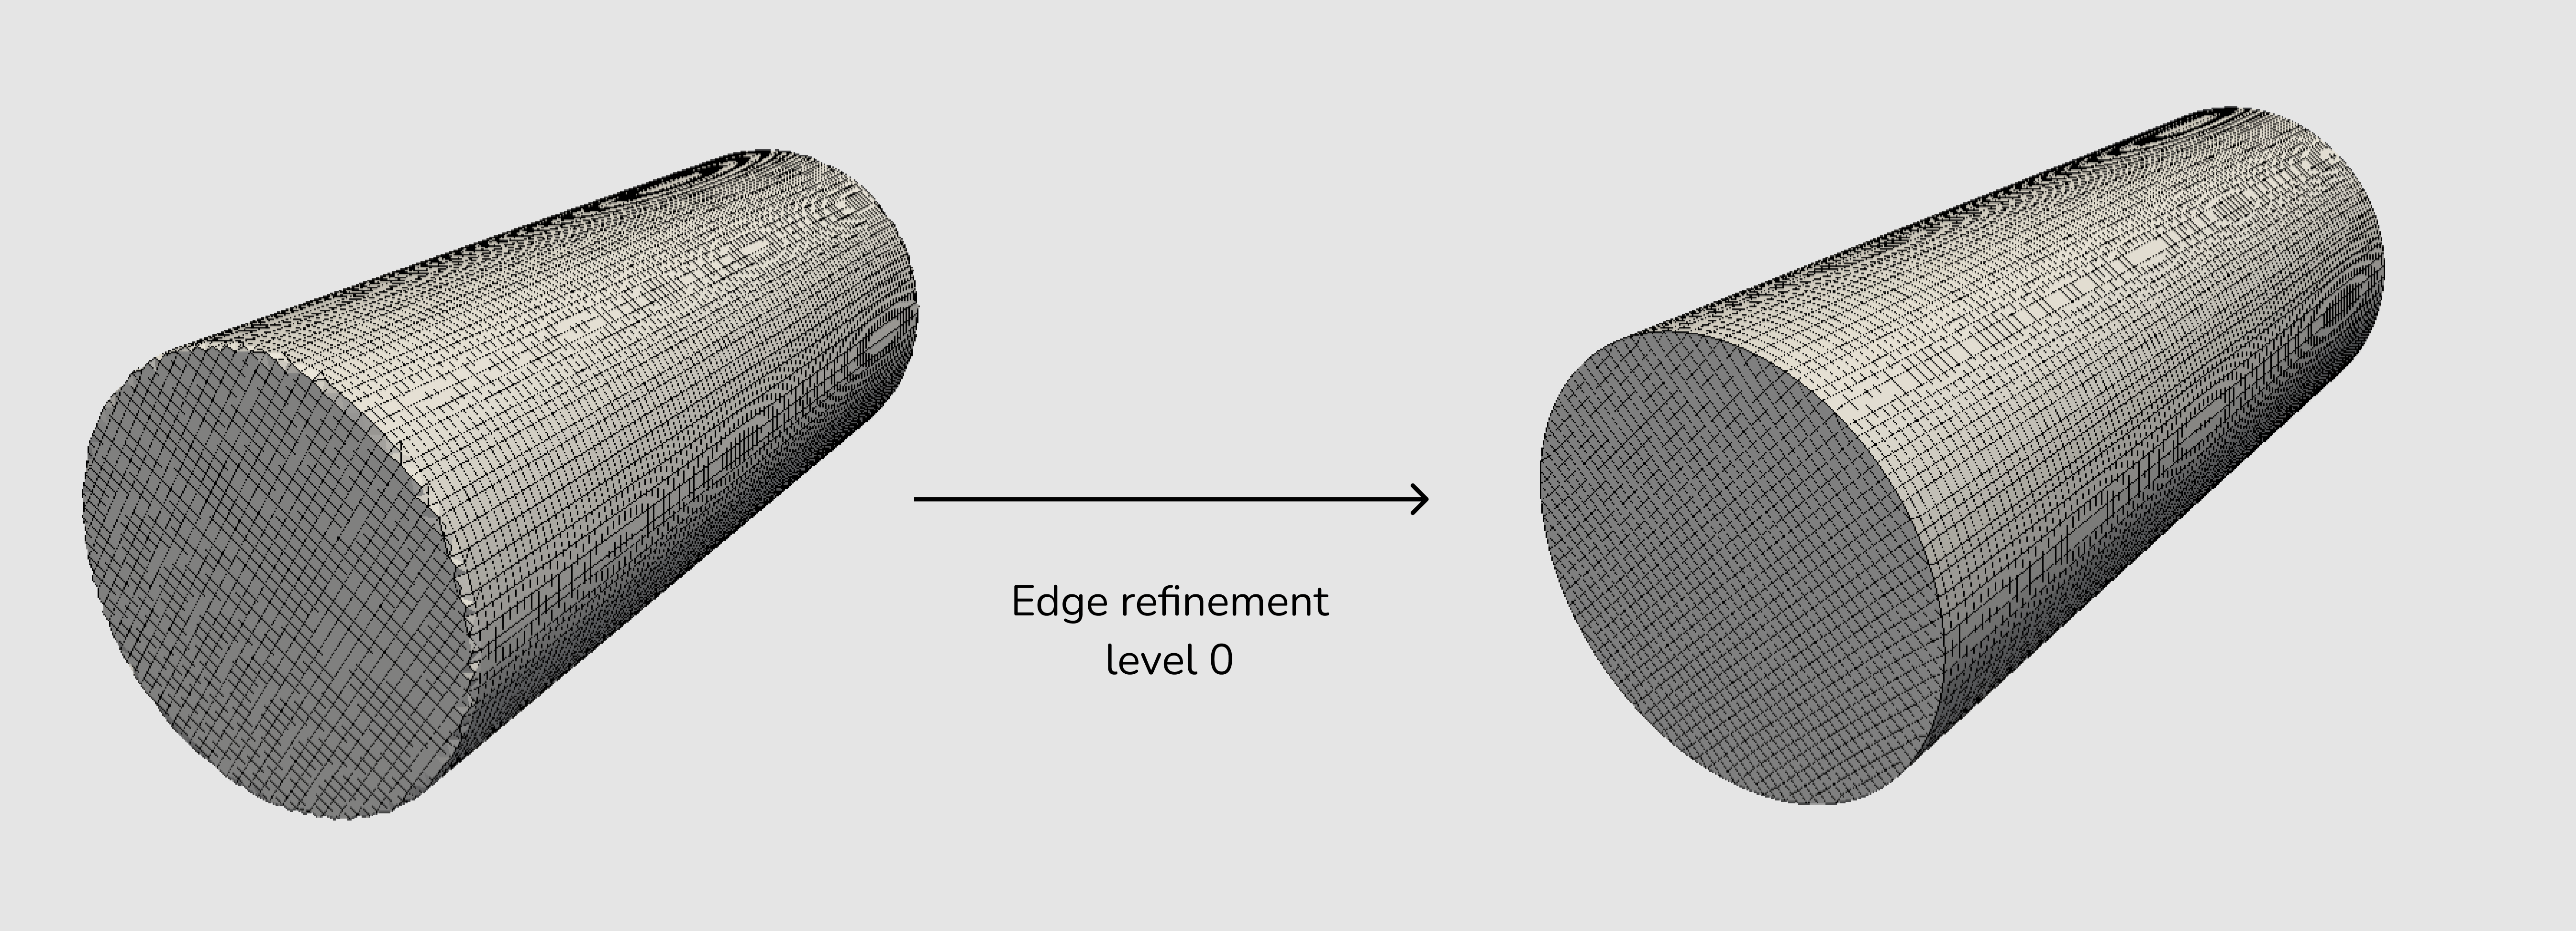 Edges refinement cylinder example